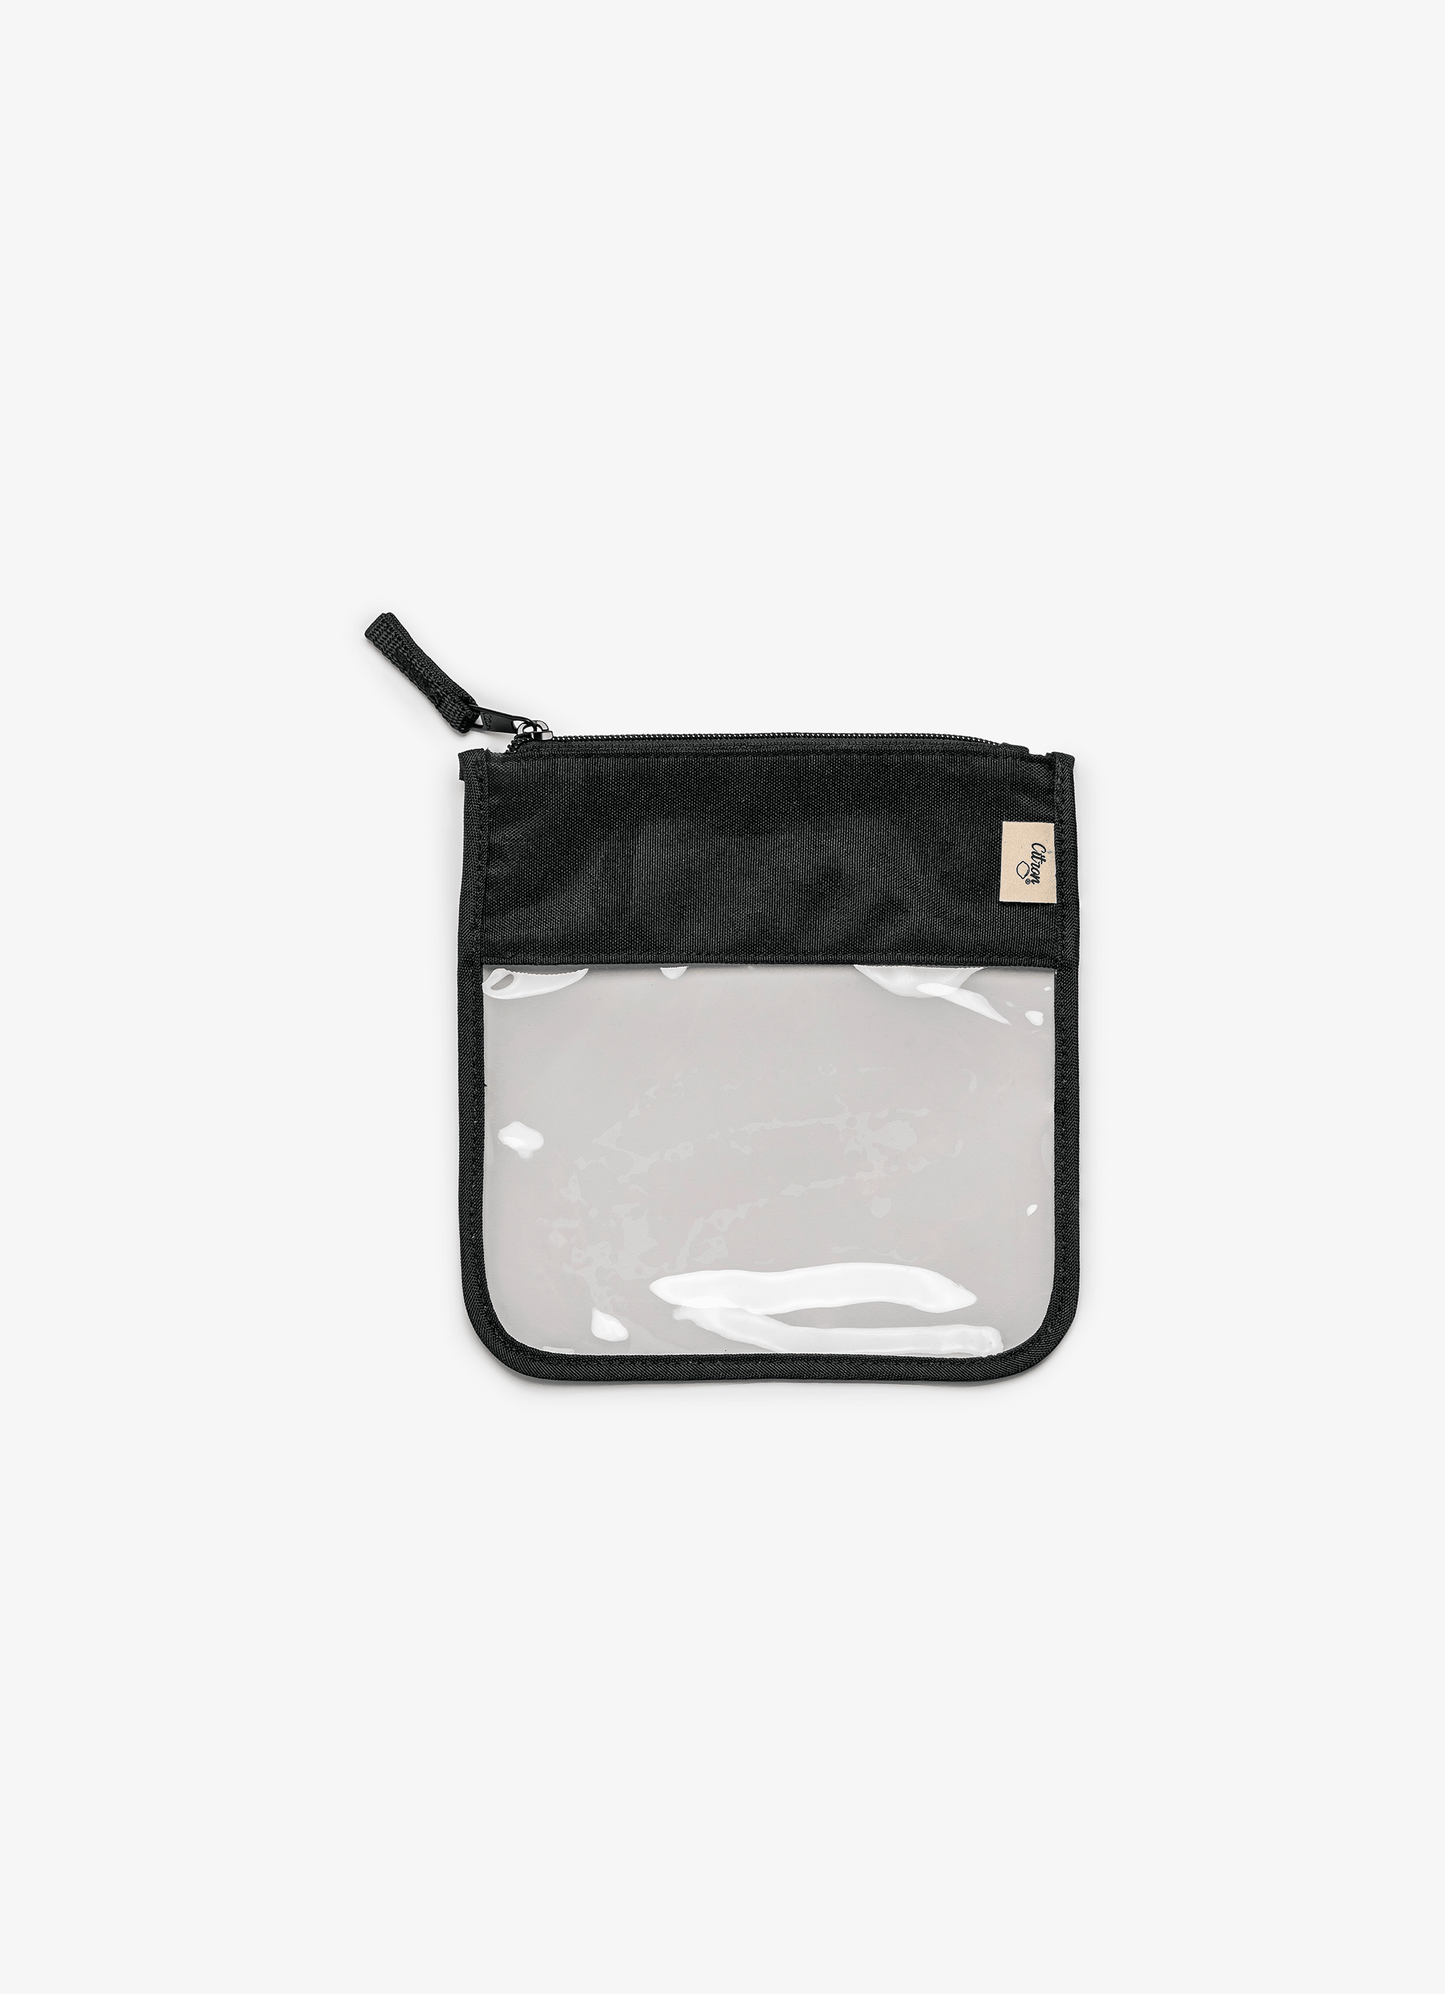 Clear Zipper Pouch - Small - Black